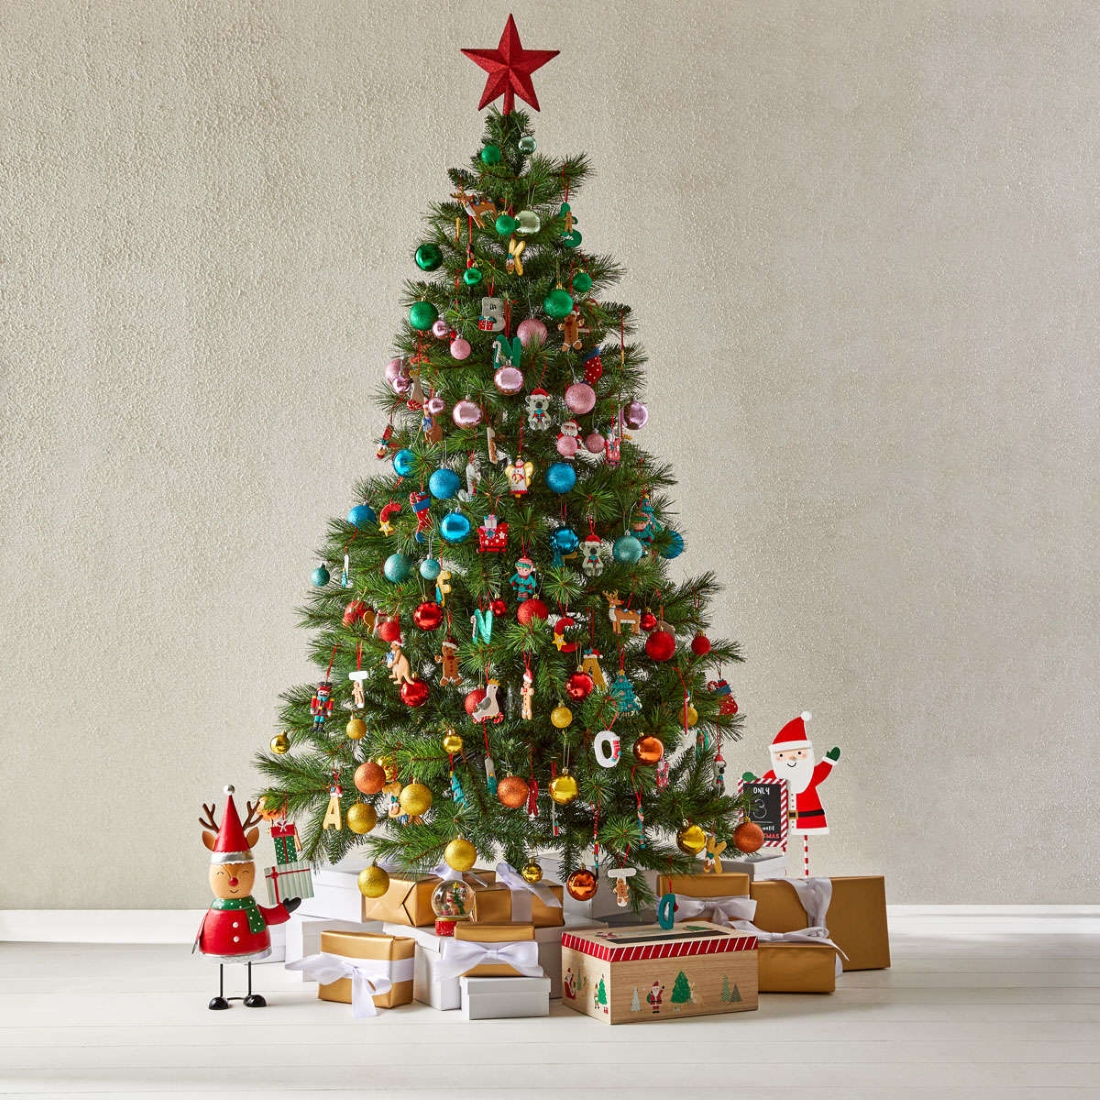 Kmart_Bestcost_best selling christmas trees